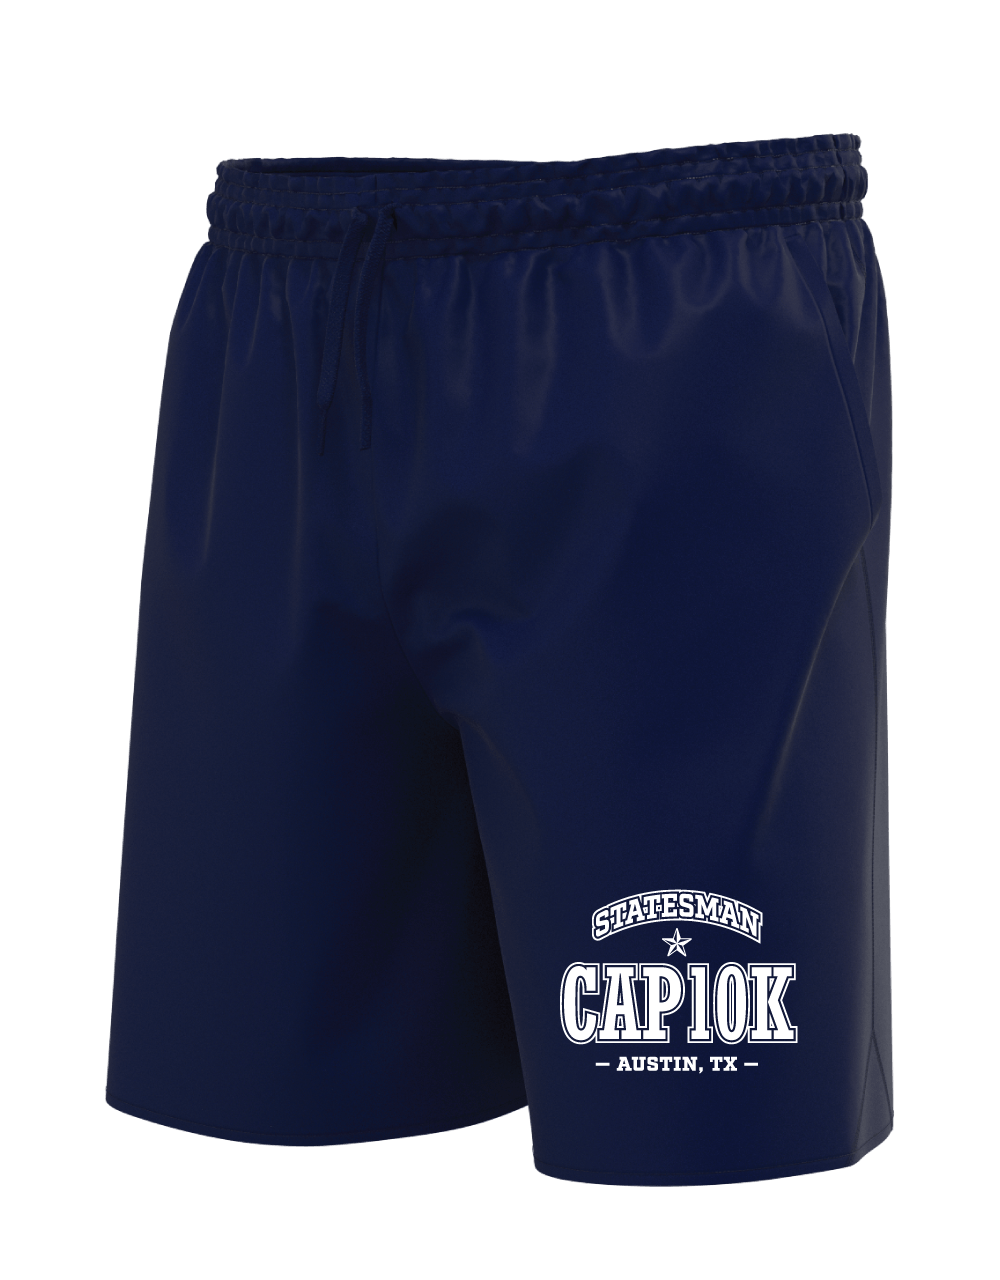 Cap10K men's shorts